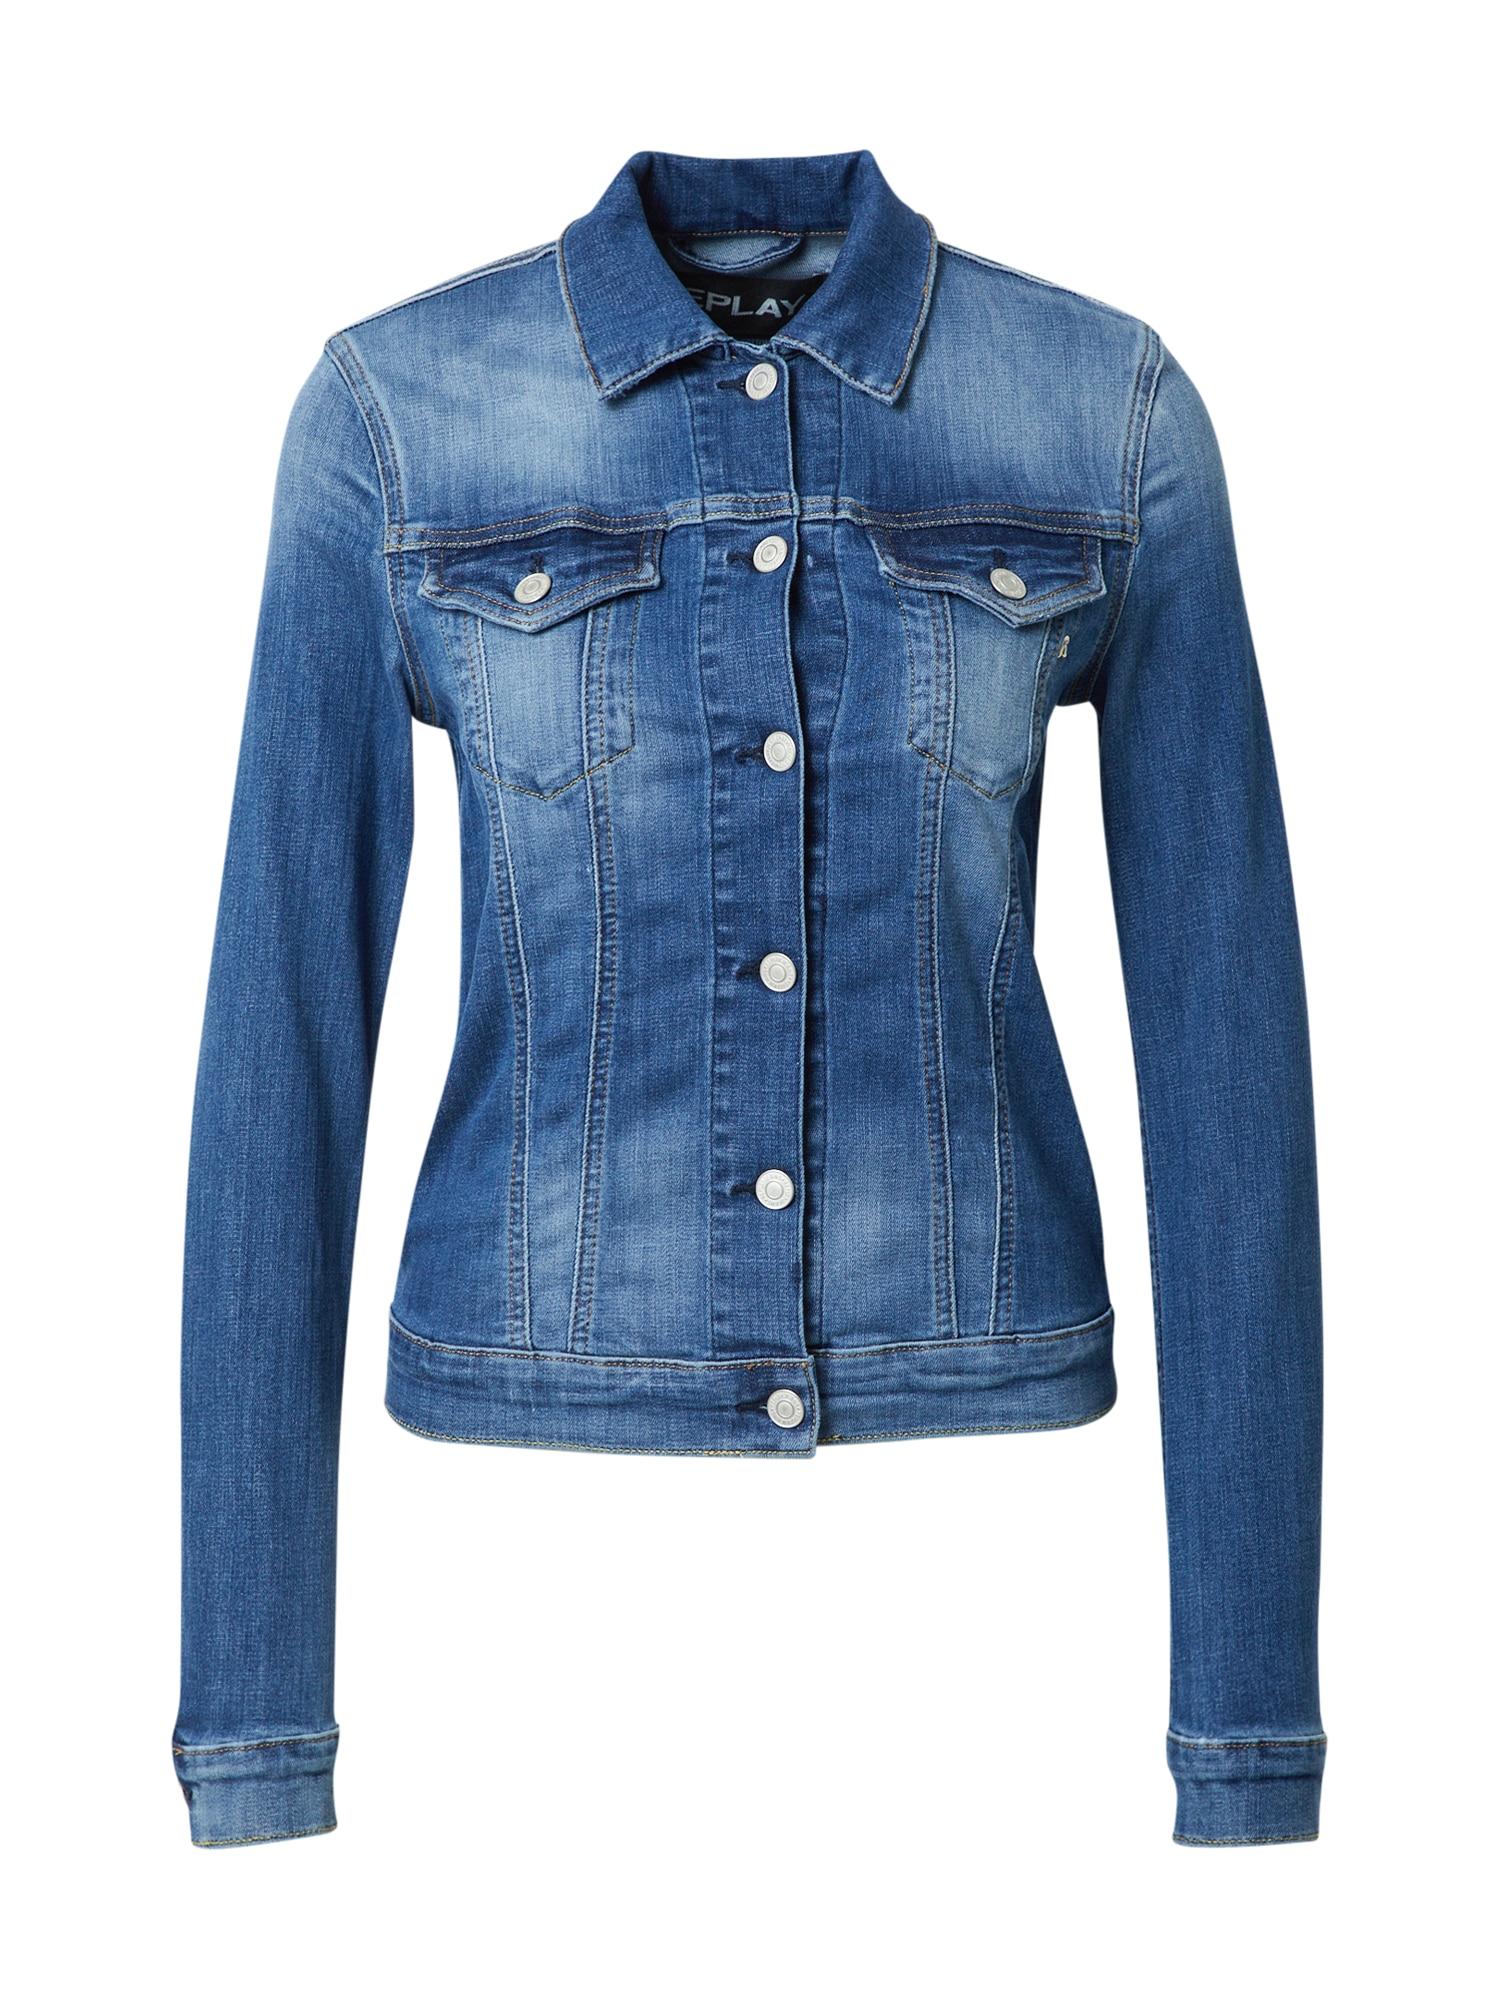 Replay Jeansjacke Denim Jacket Blau in Blau | Lyst AT